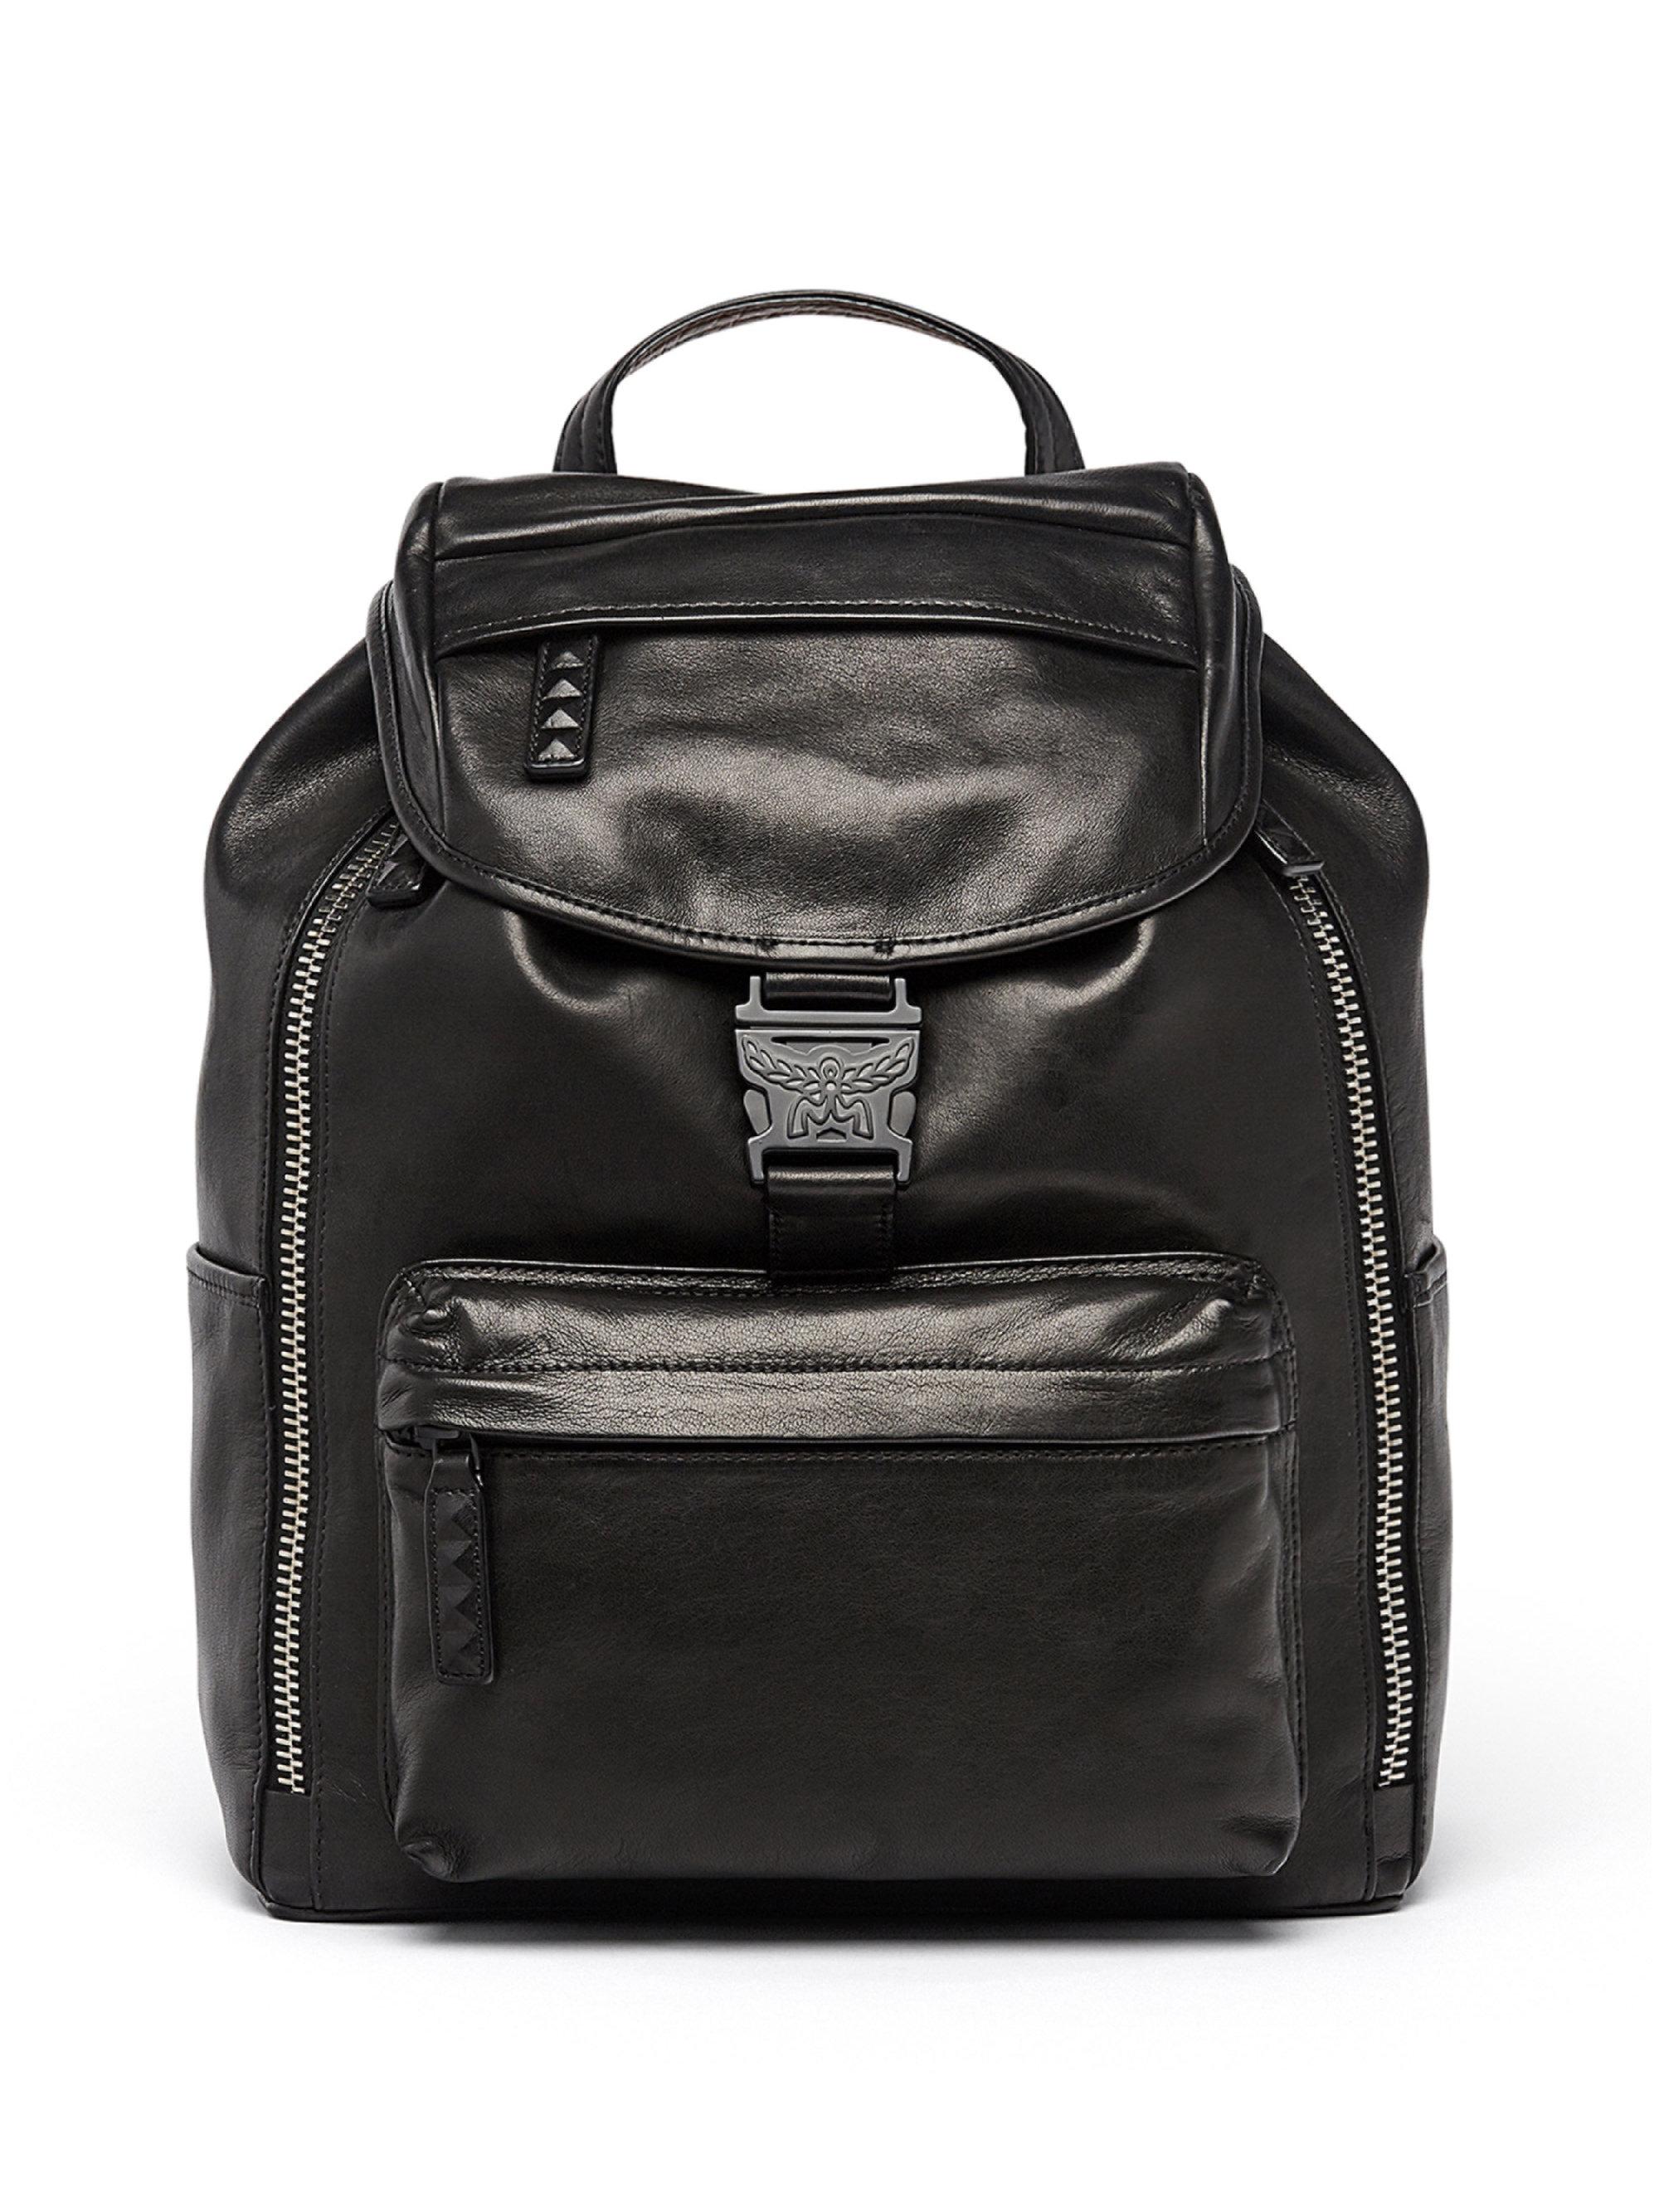 Lyst - Mcm Killian Leather Backpack in Black